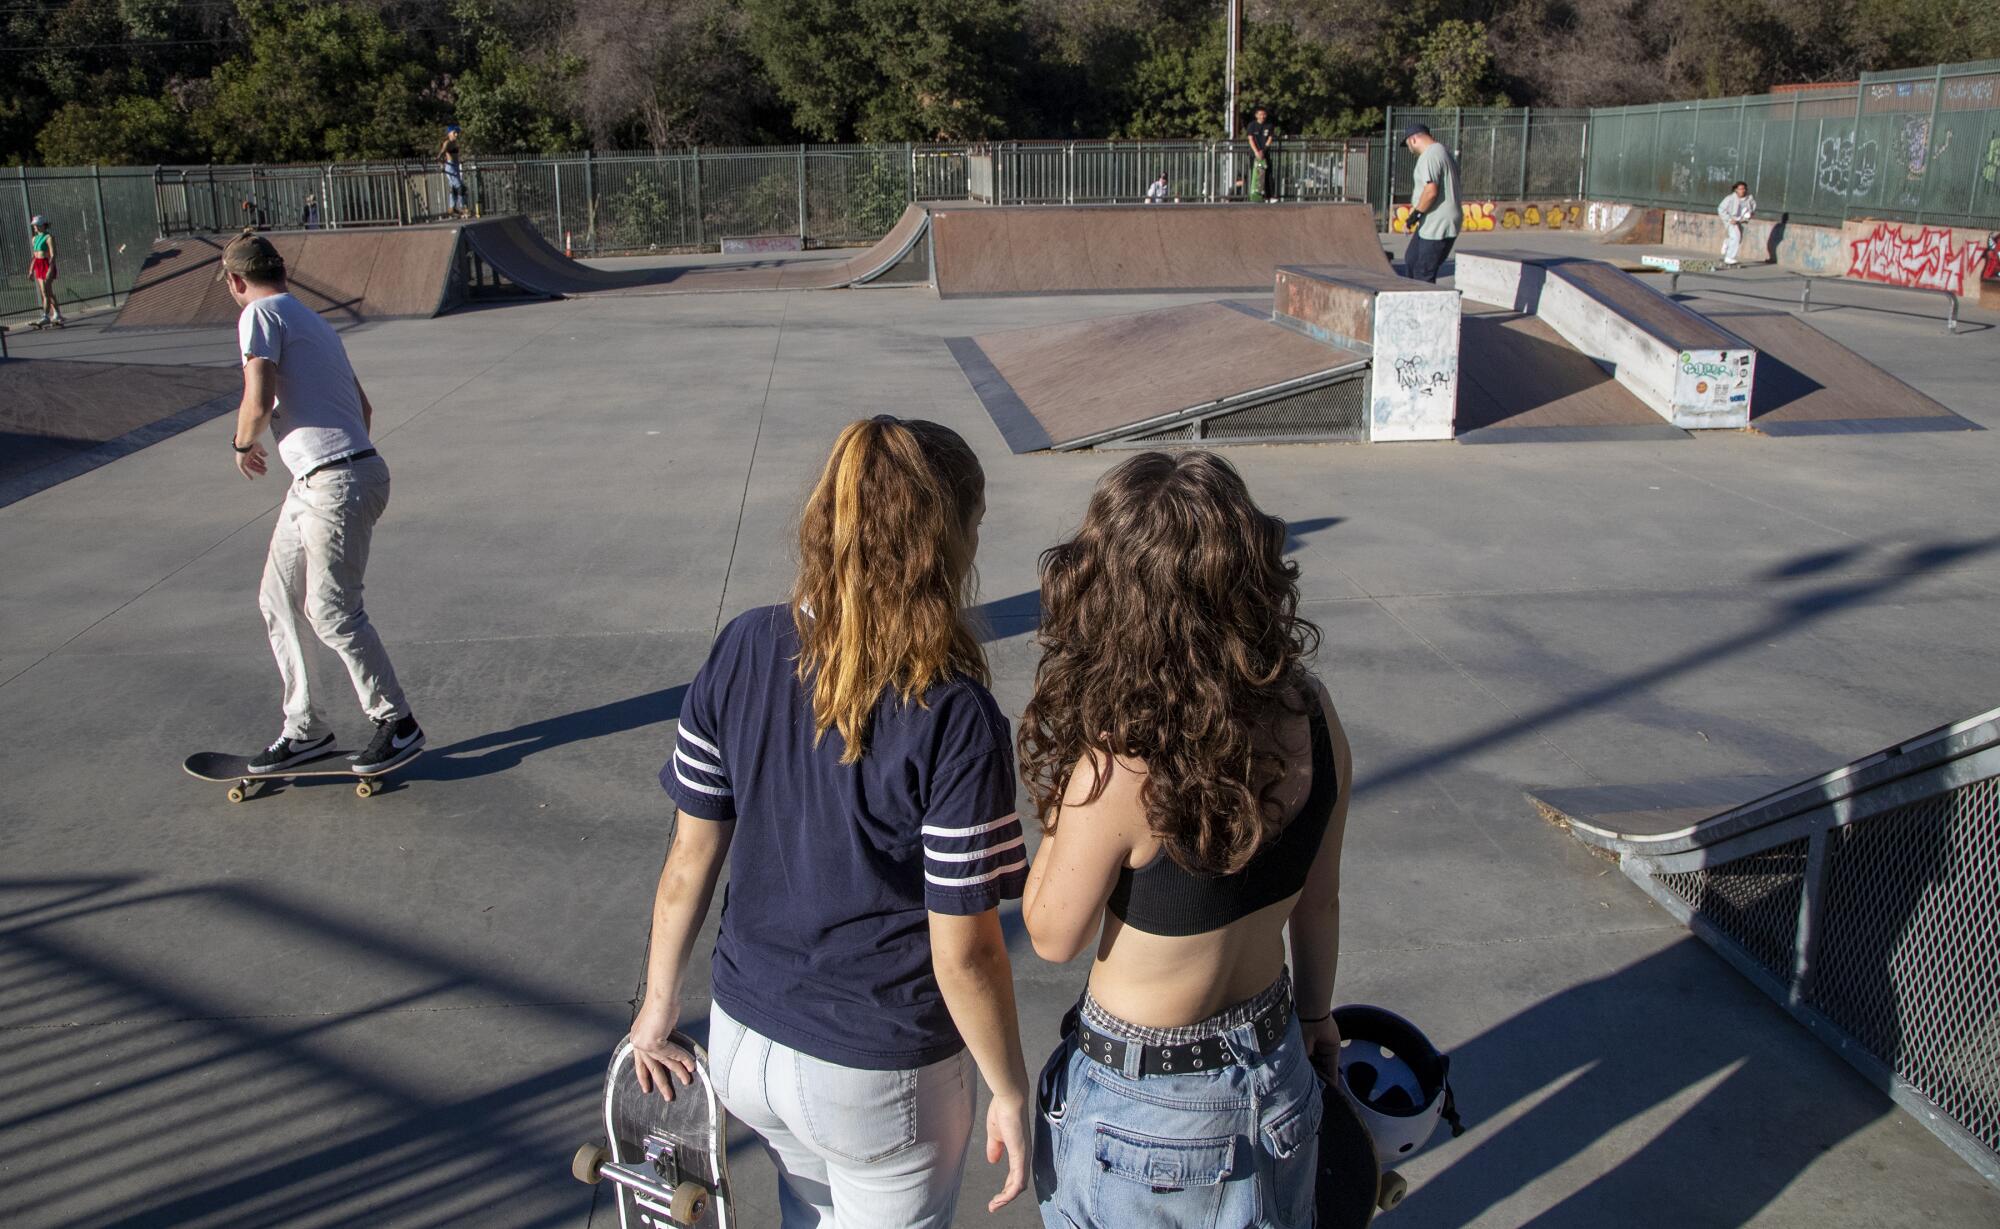 Aunt Skatie crew leader Maggie Bowen, left, and Ava Van Vechten check out the scene at South Pasadena Skate Park.